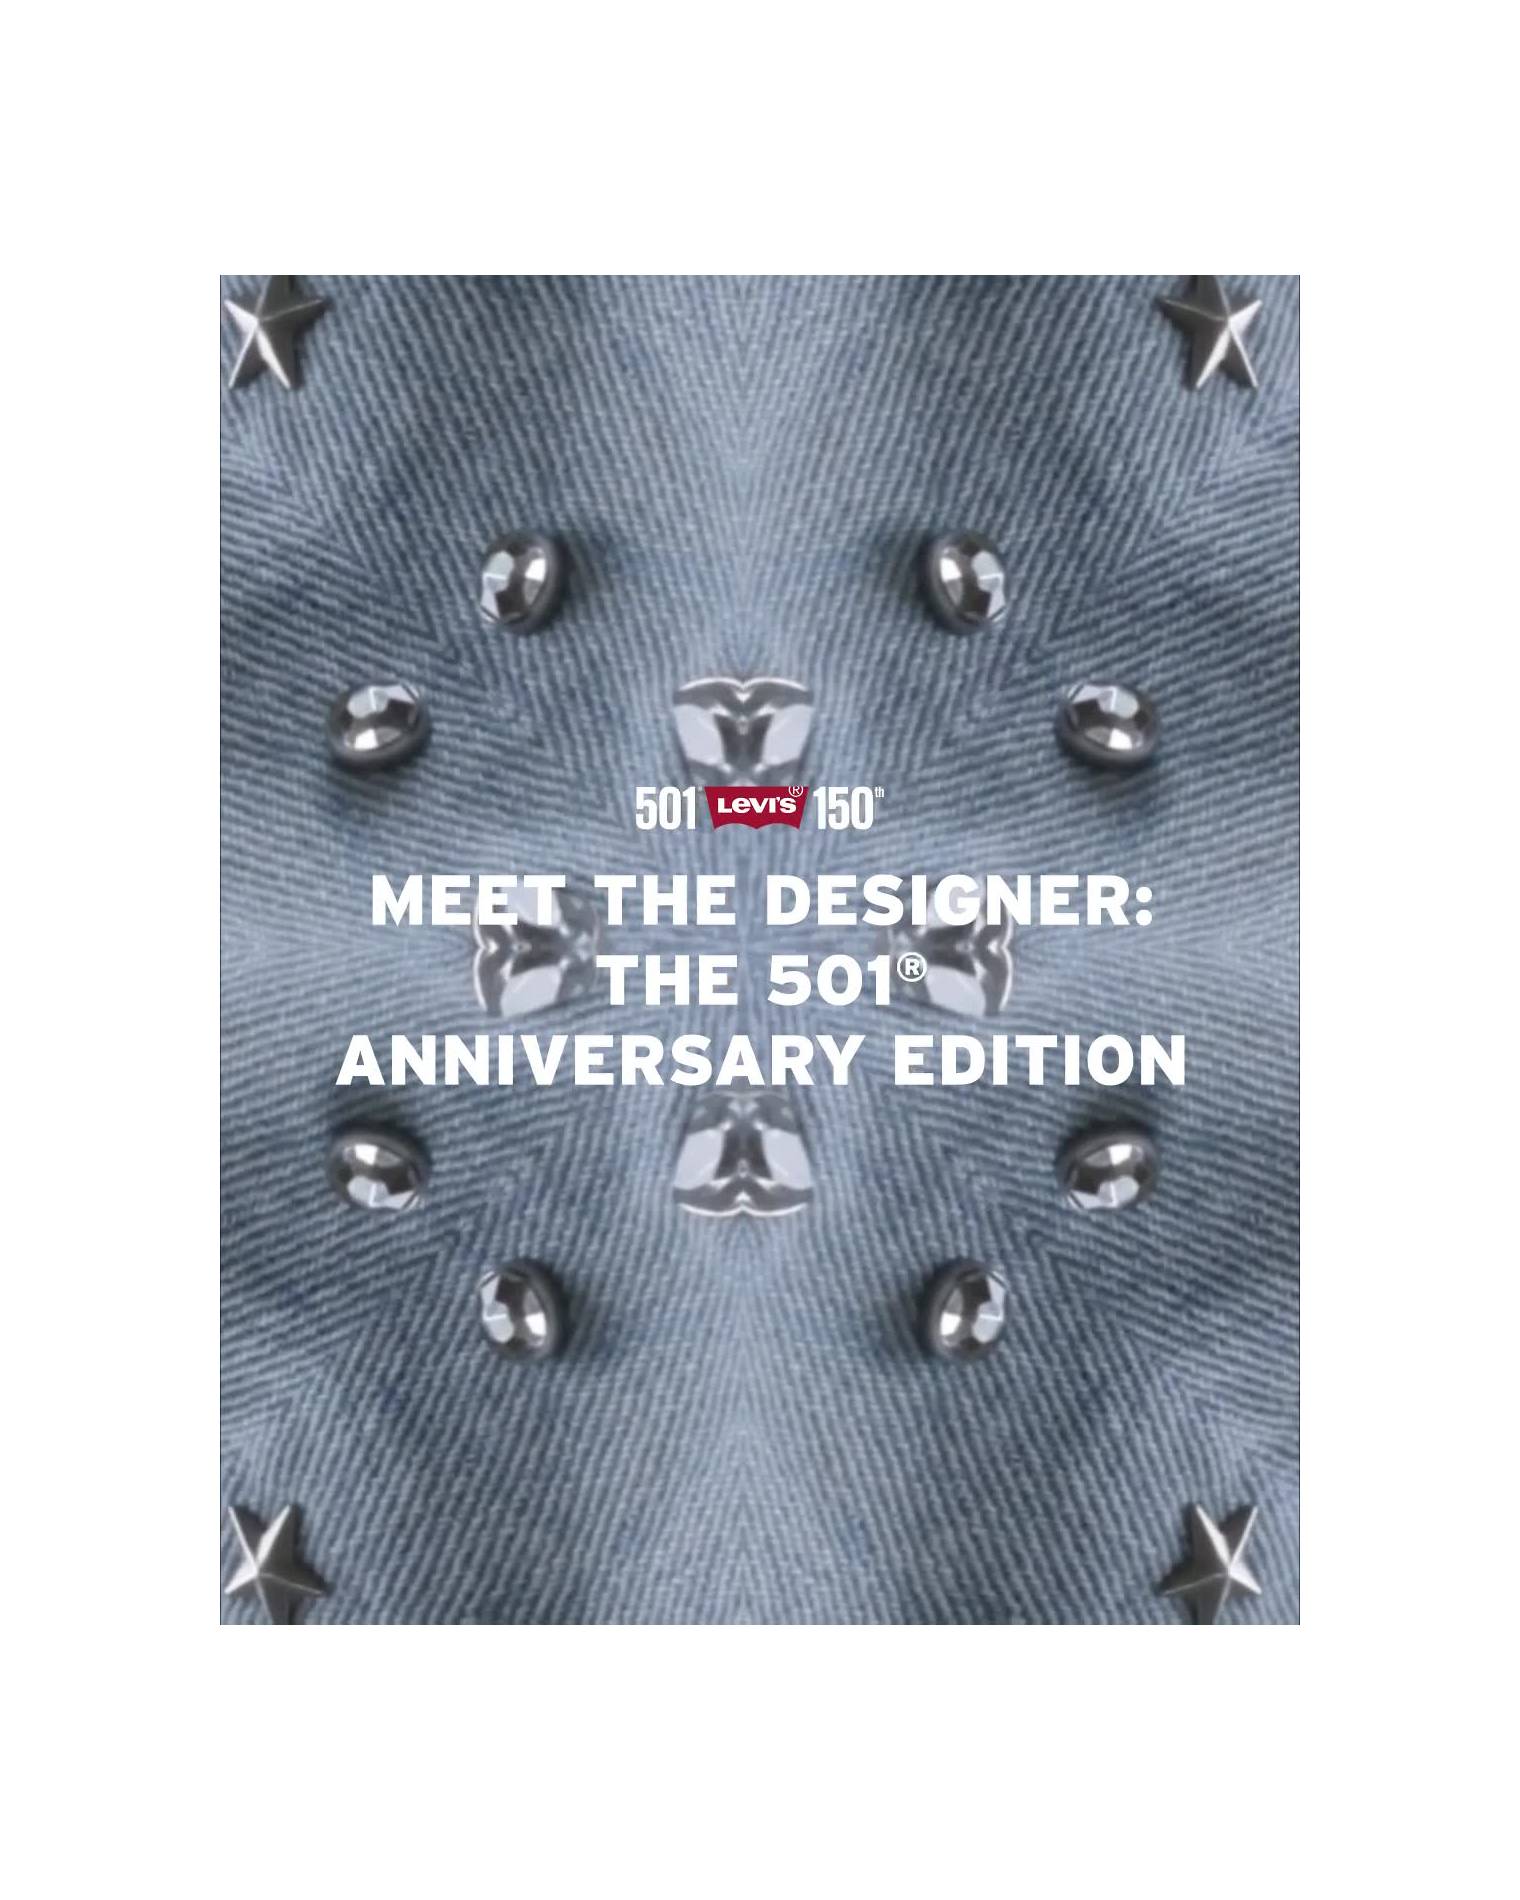 MEET THE DESIGNER: THE 501® ANNIVERSARY EDITION